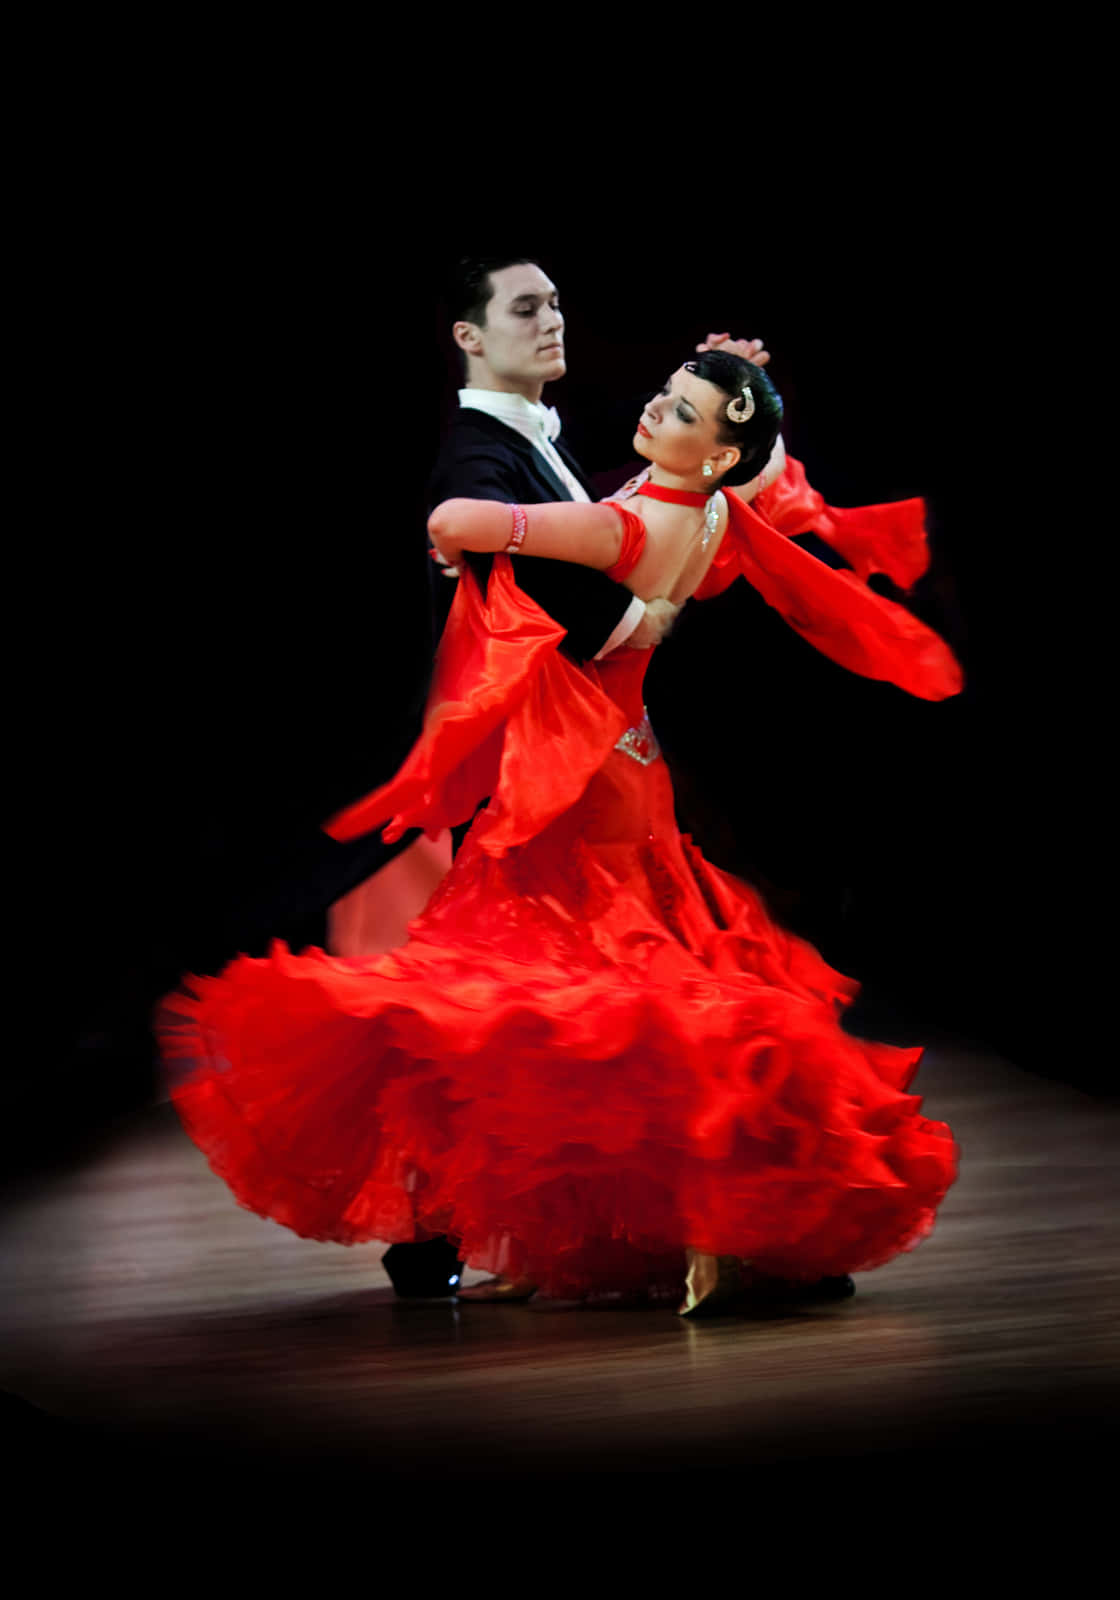 Captivating Rhythm: A Couple's Passionate Dance Moment